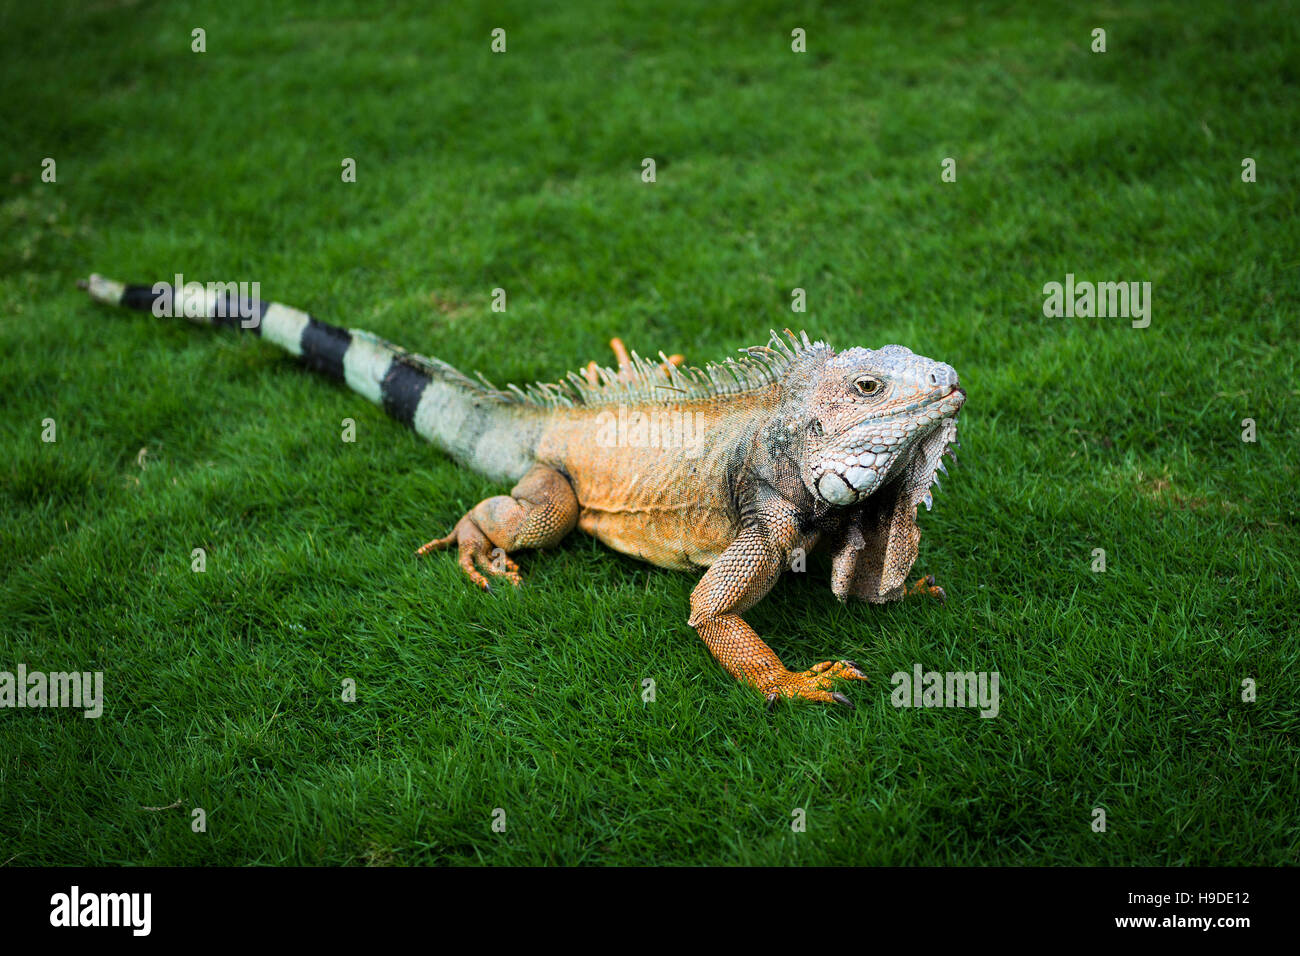 Iguana in the grass in a park in Guayaquil in Ecuador, South America Stock Photo